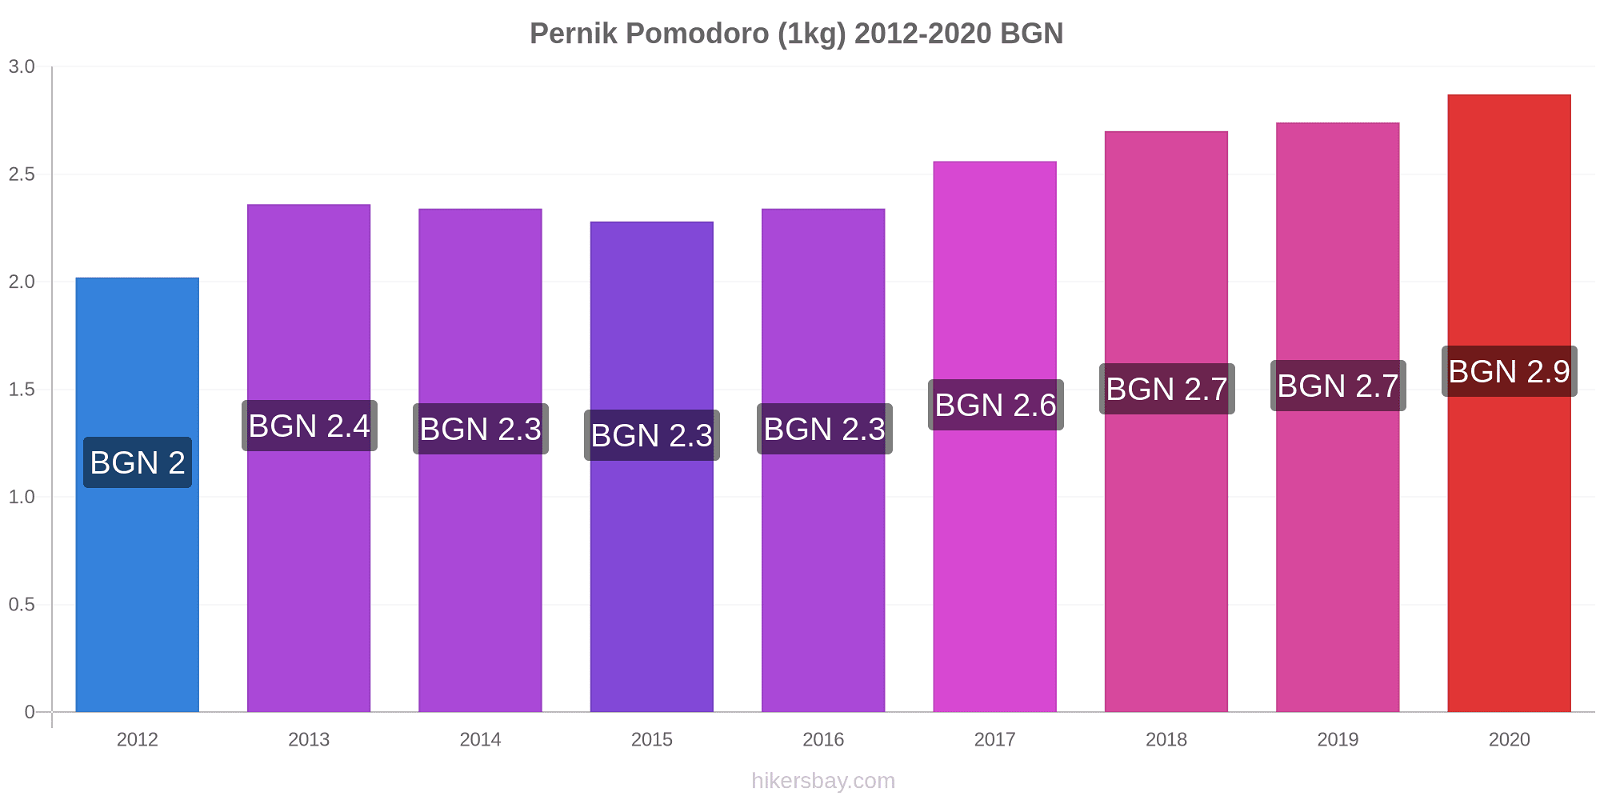 Pernik variazioni di prezzo Pomodoro (1kg) hikersbay.com